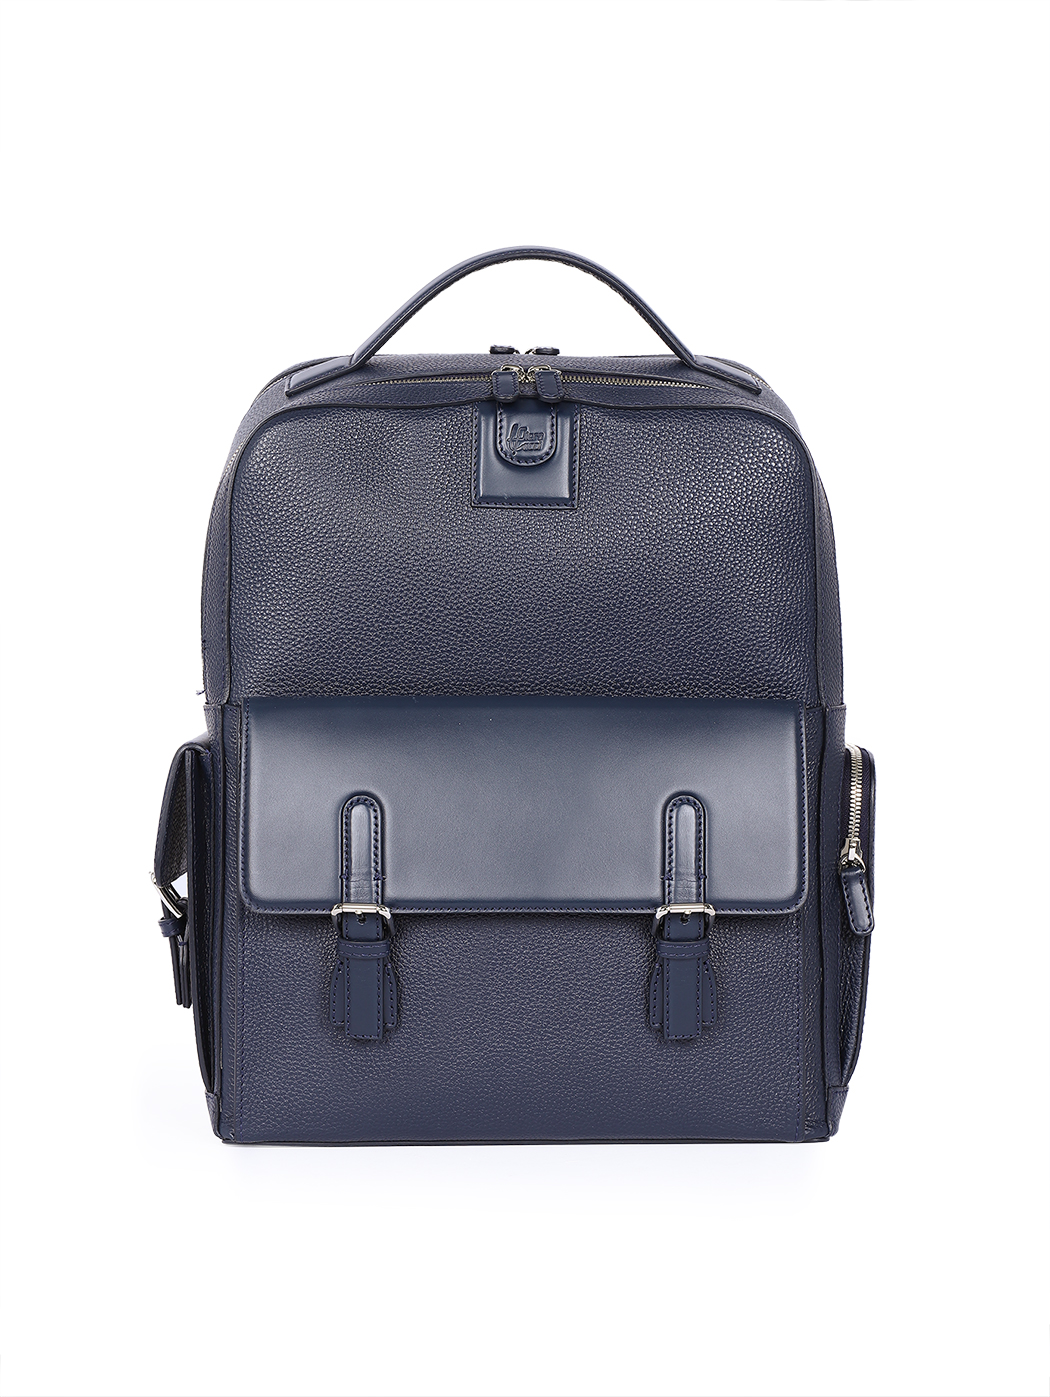 Professional Backpack Computer Leather Bag Blue